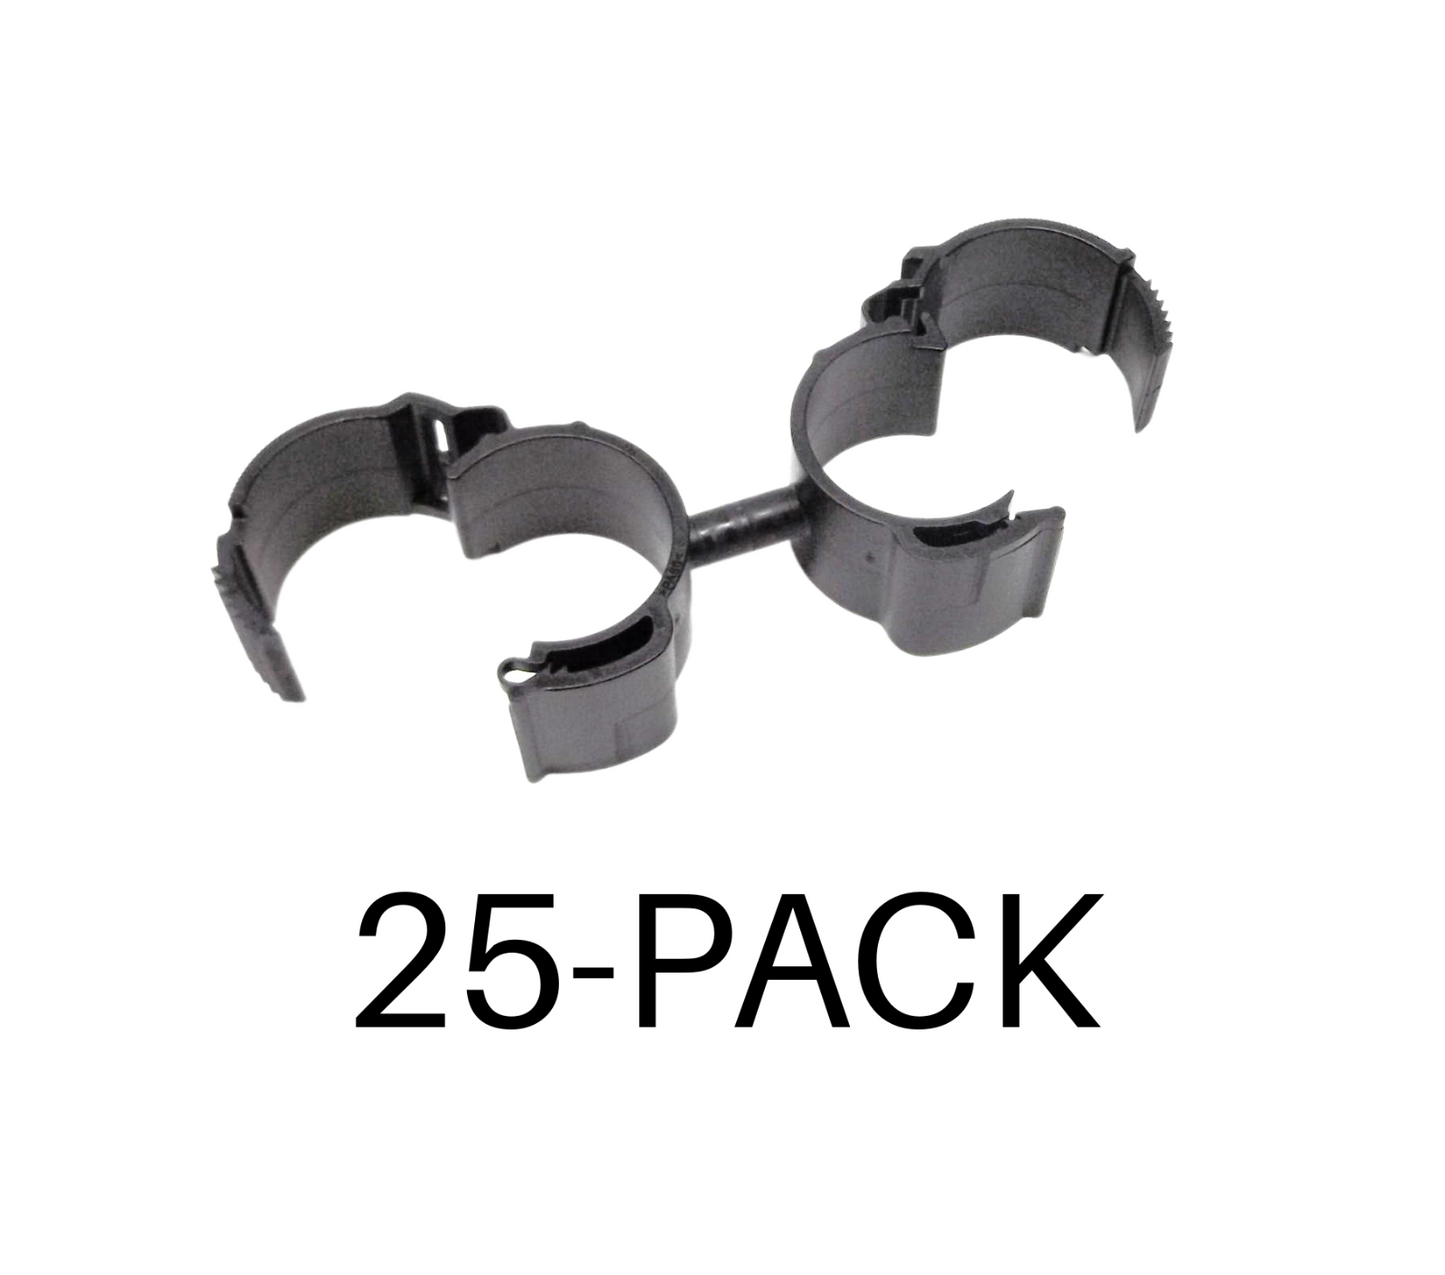 25-PACK ARAYMOND 216884000 DOUBLE 1" PIPE CLIPS ROTATABLE LOCKABLE BLACK PLASTIC